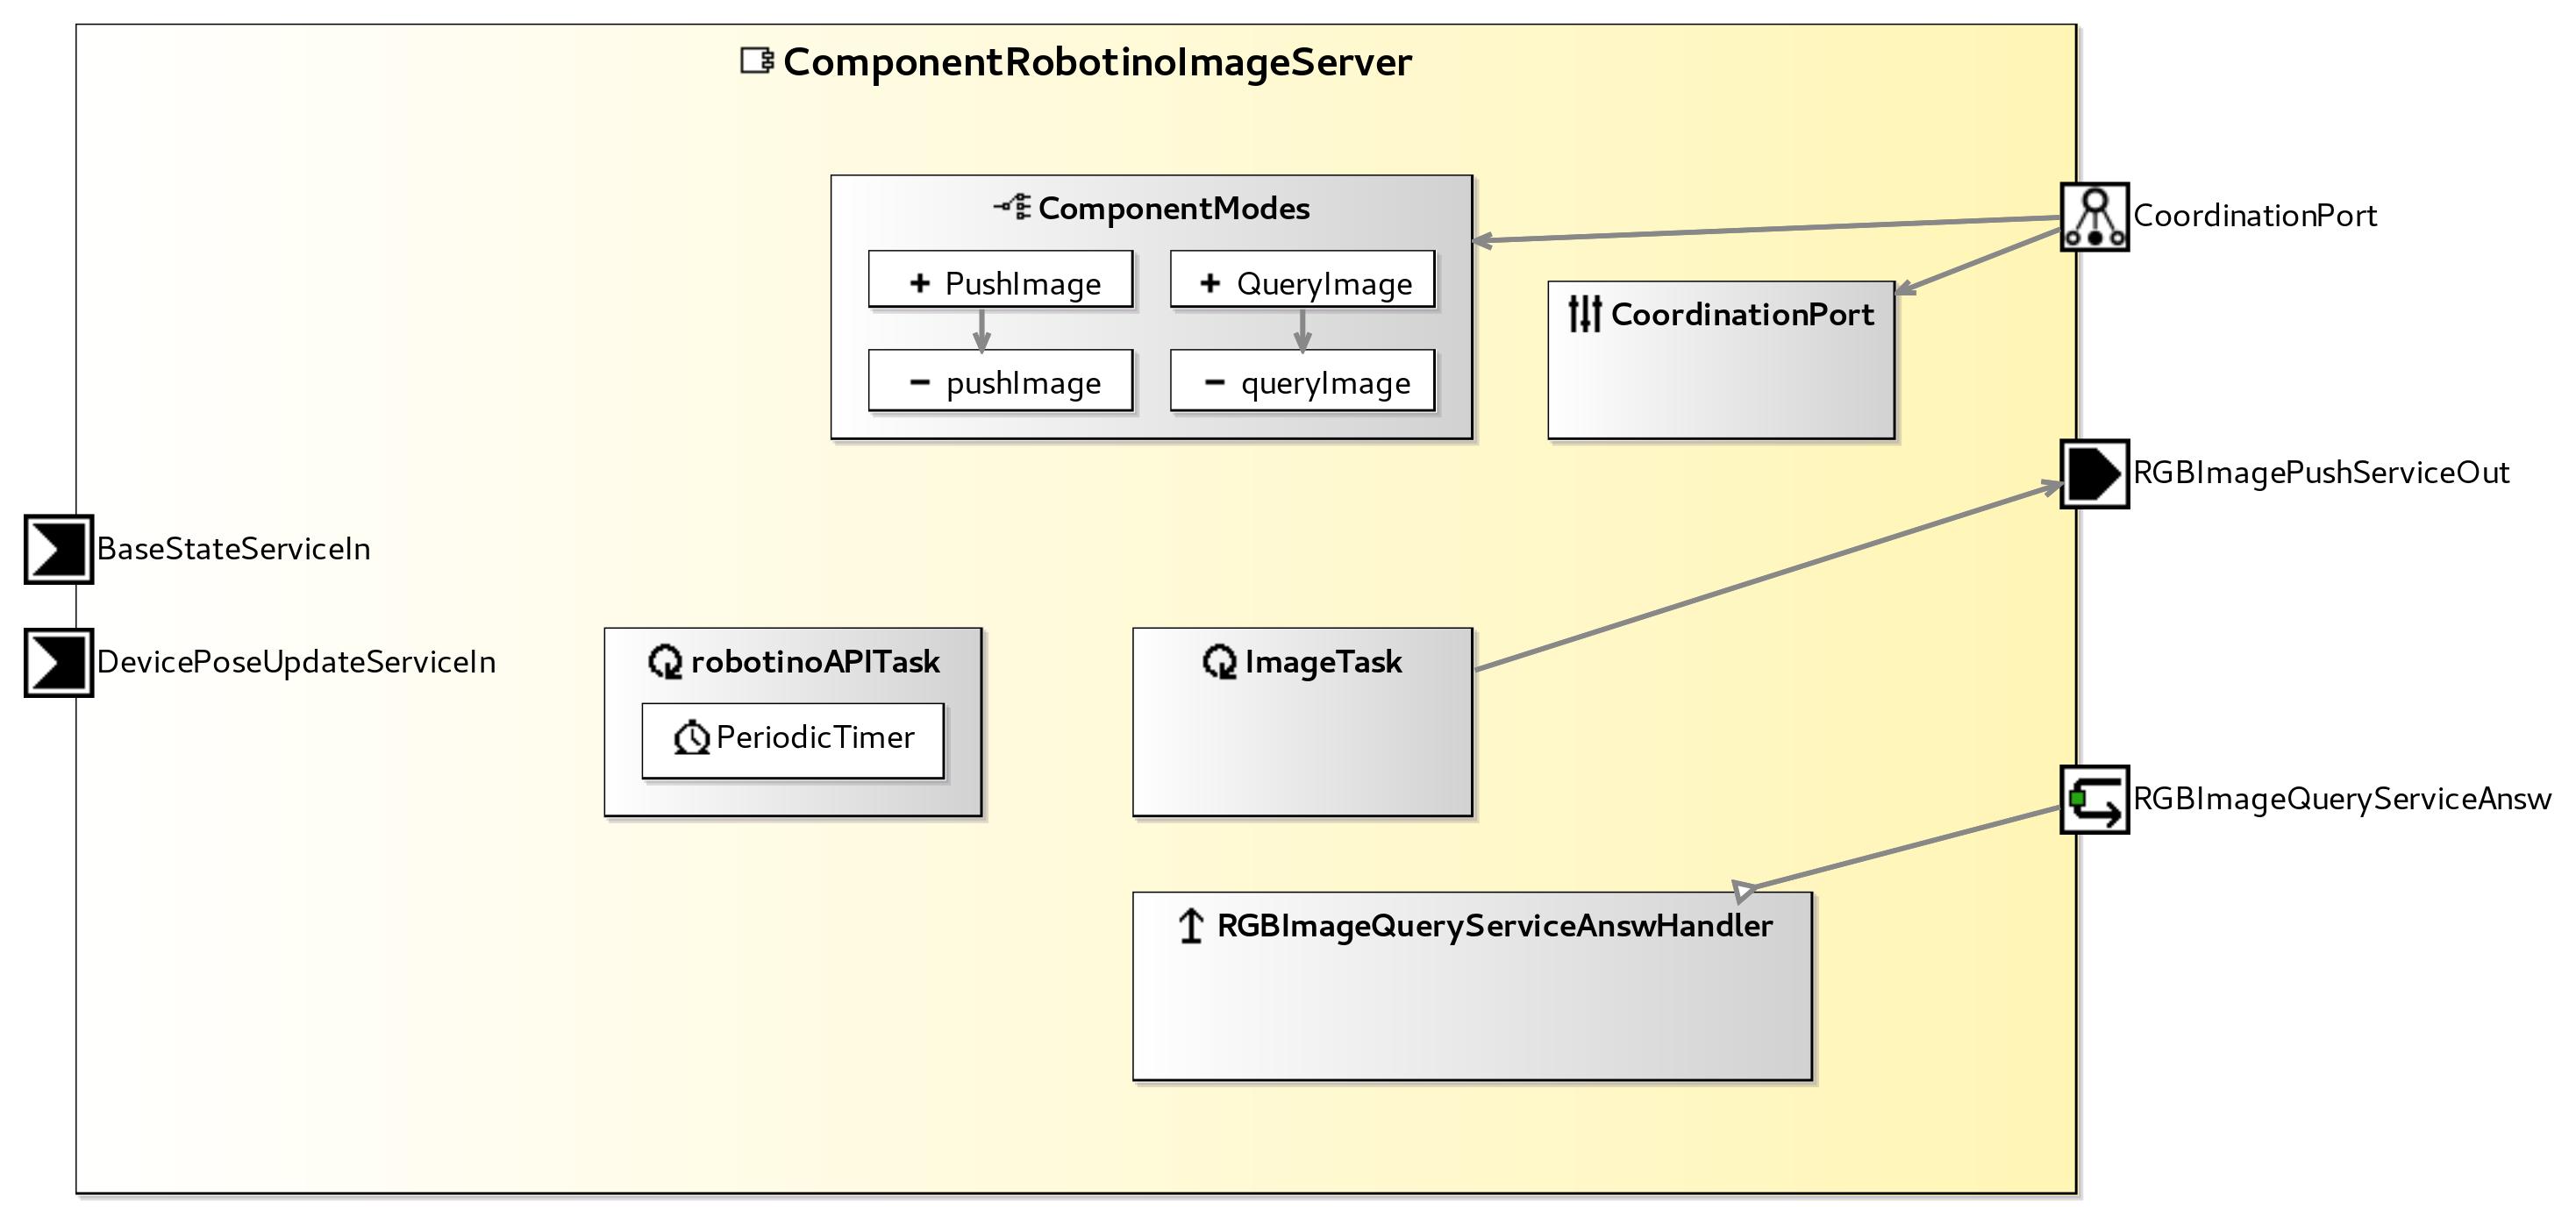 raw.githubusercontent.com_servicerobotics-ulm_componentrepository_master_componentrobotinoimageserver_model_componentrobotinoimageservercomponentdefinition.jpg